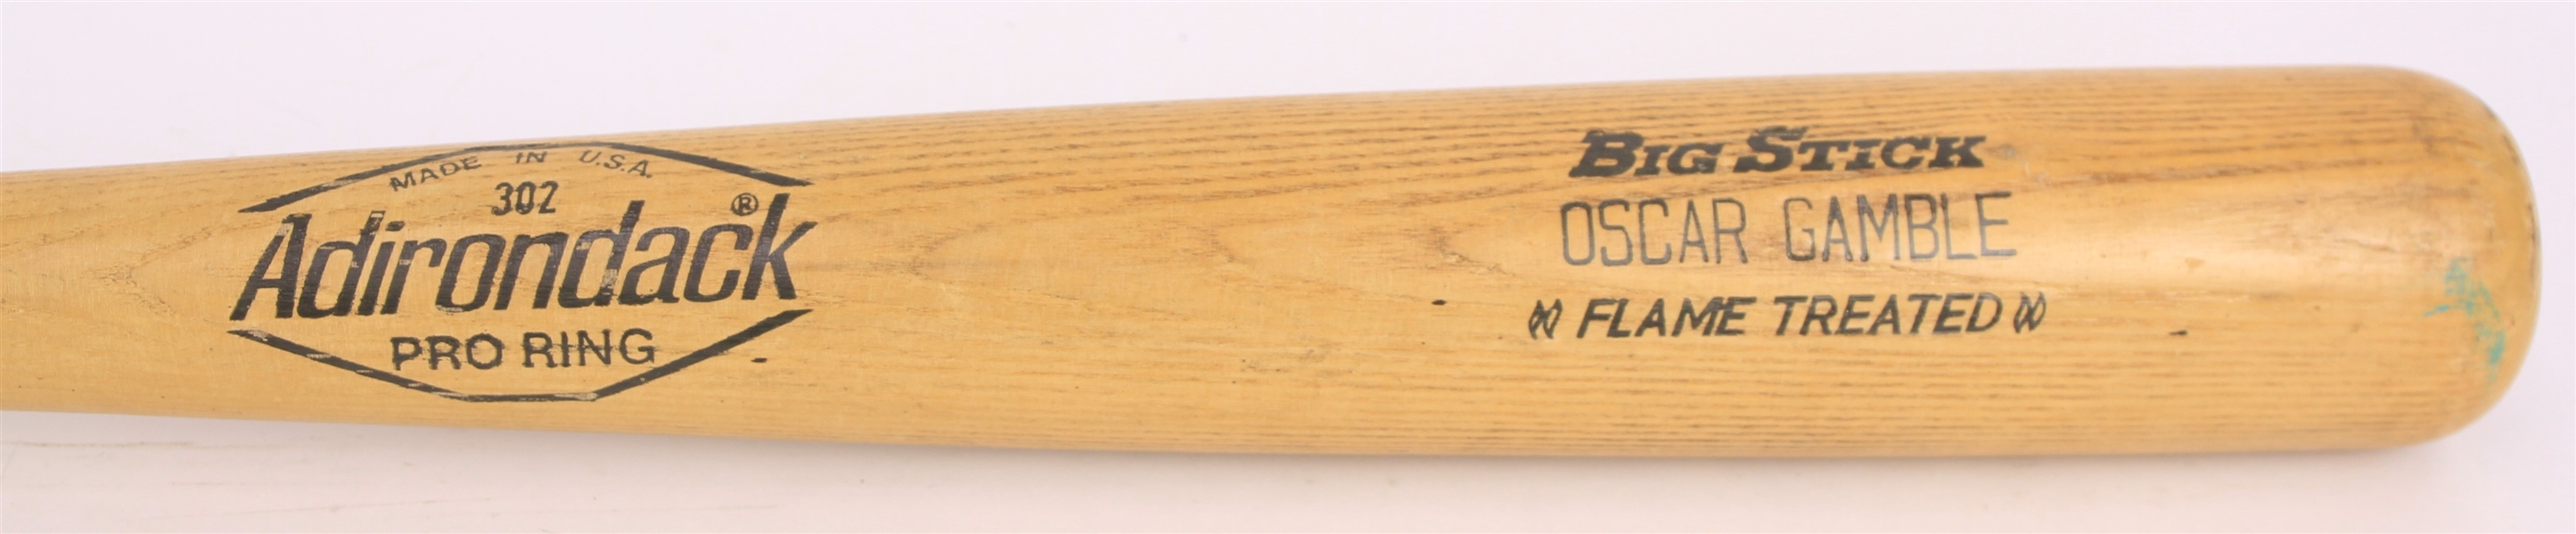 1980 Oscar Gamble New York Yankees Professional Model Adirondack Bat (MEARS LOA)